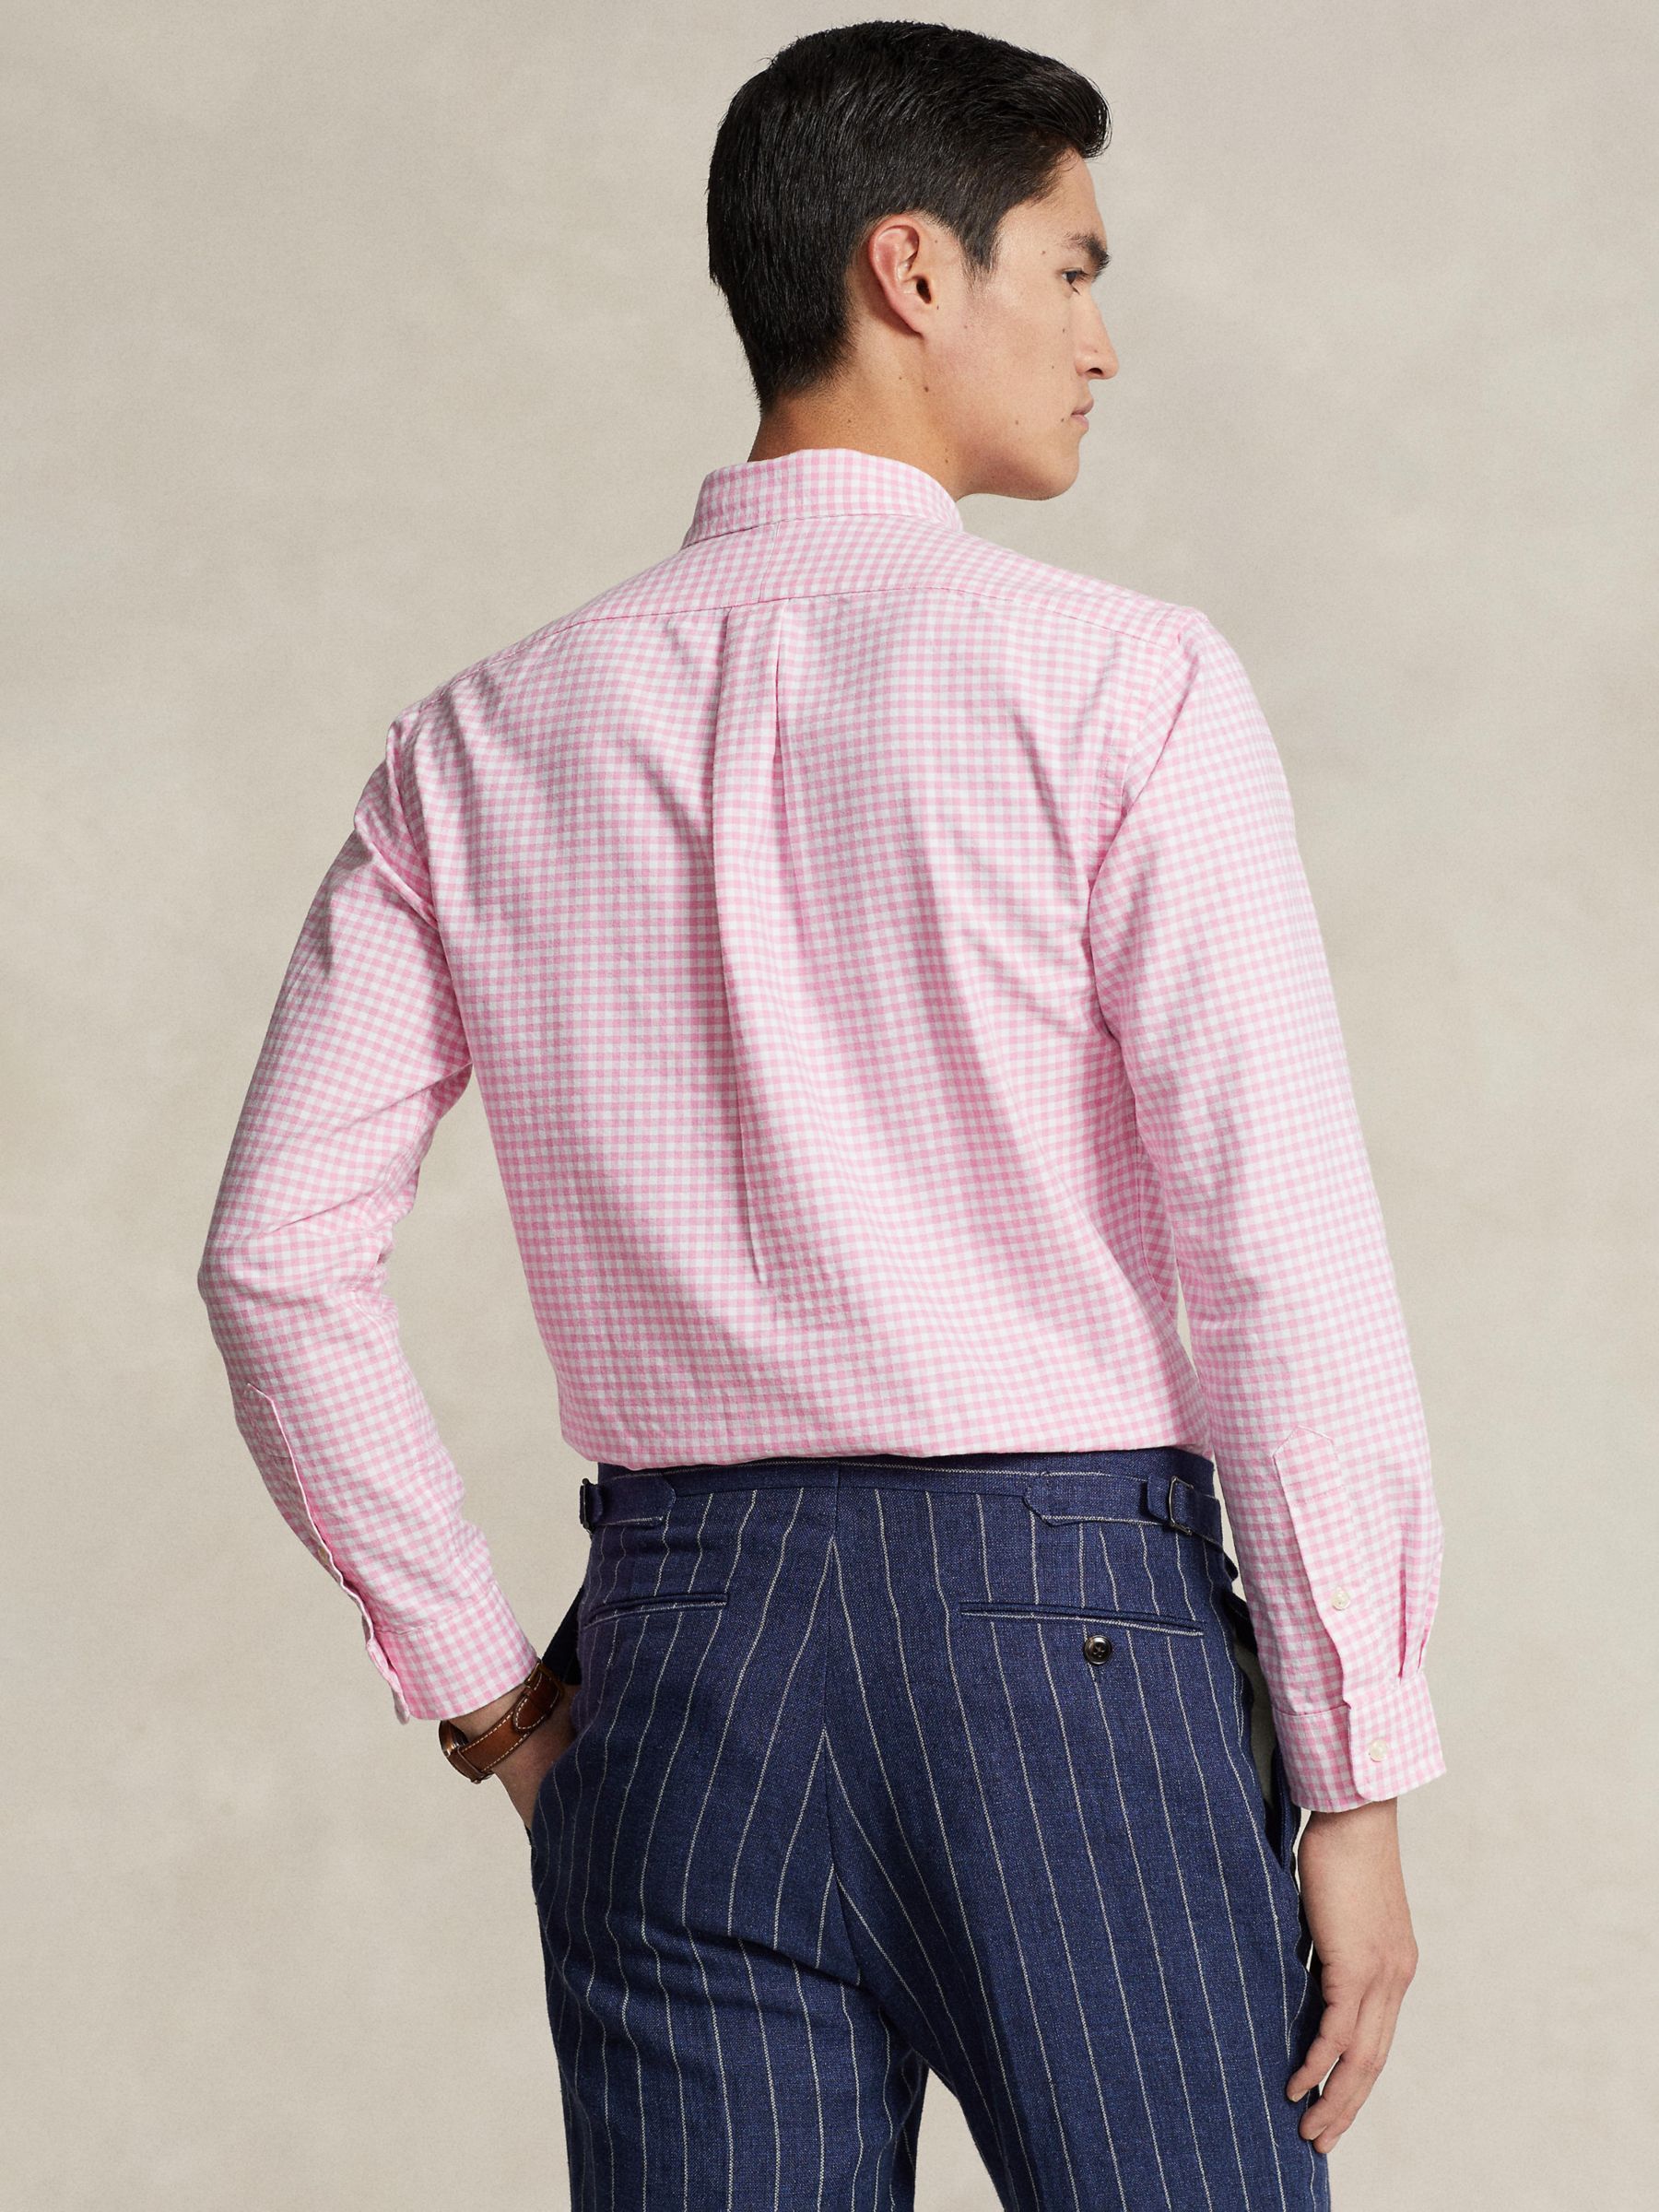 Ralph Lauren Tailored Fit Gingham Oxford Shirt, Pink/White, XL